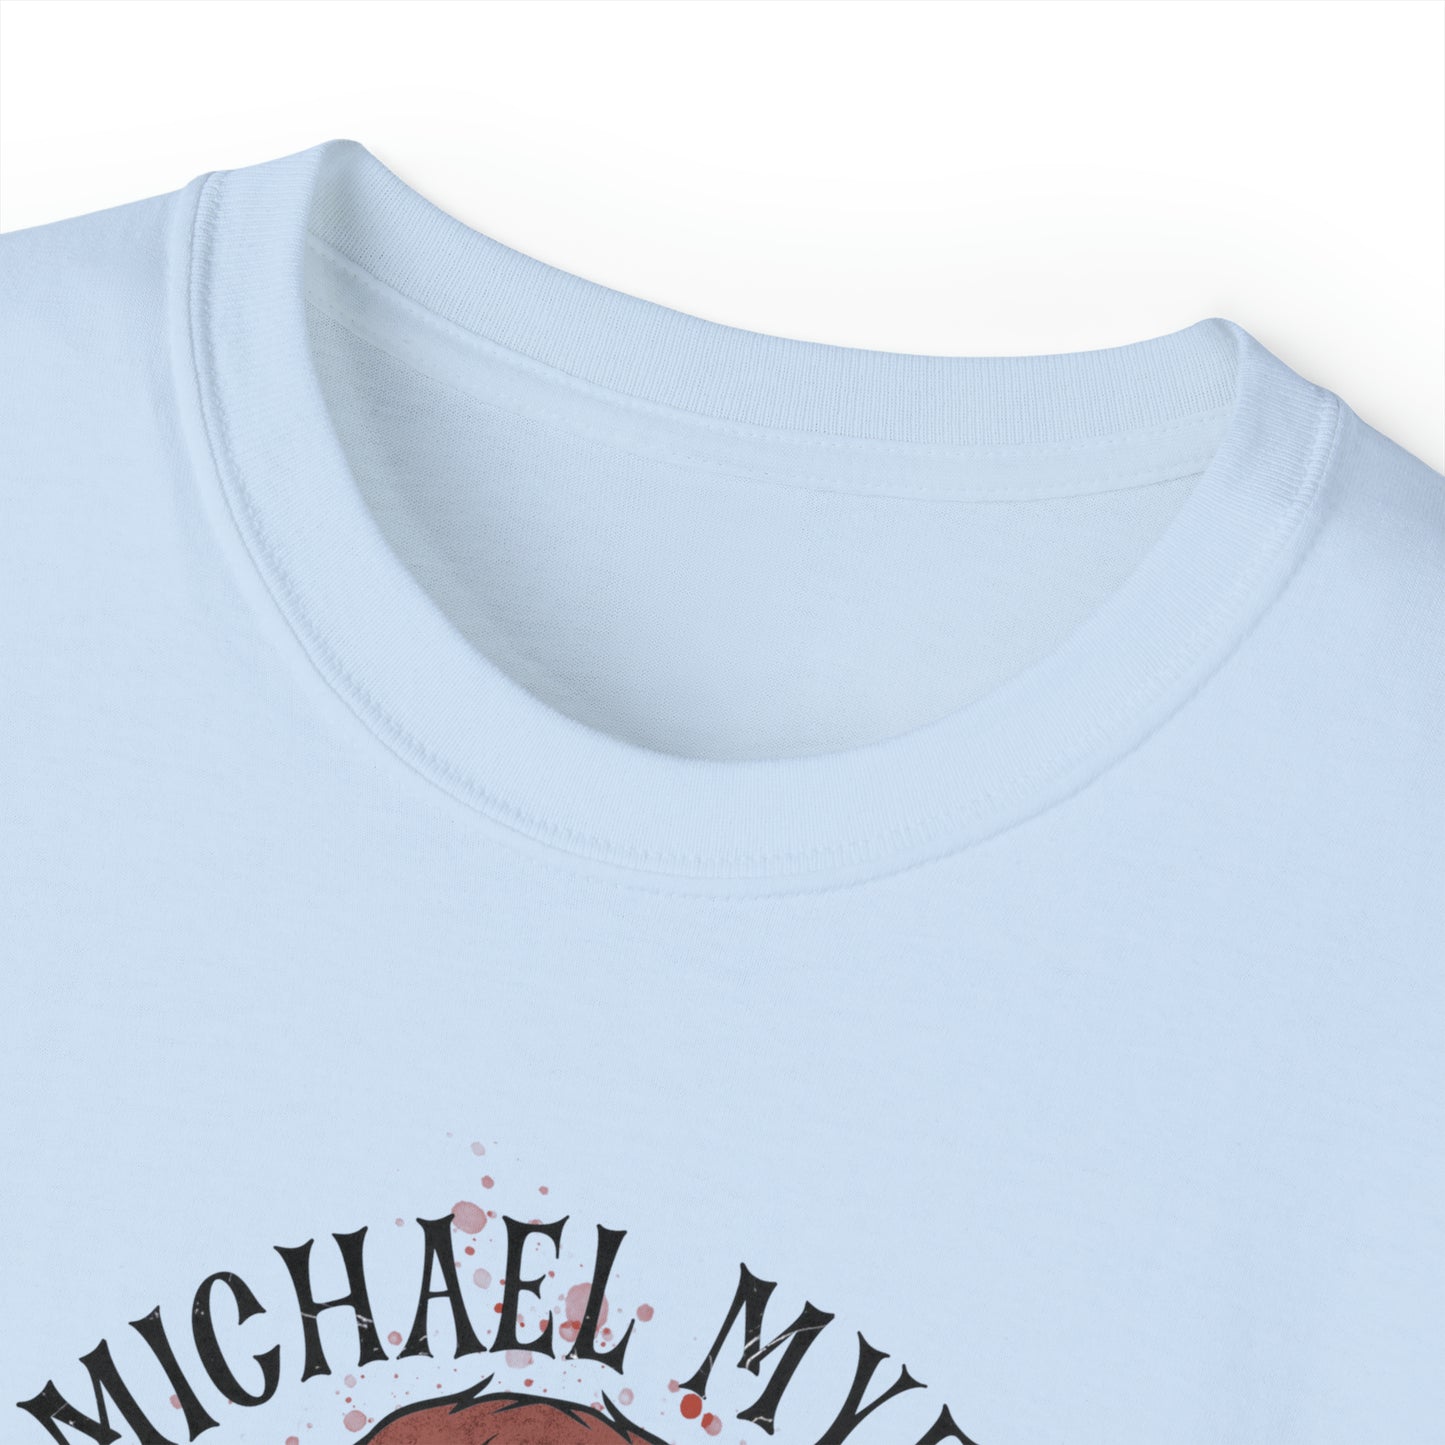 Michael Myers T-Shirt